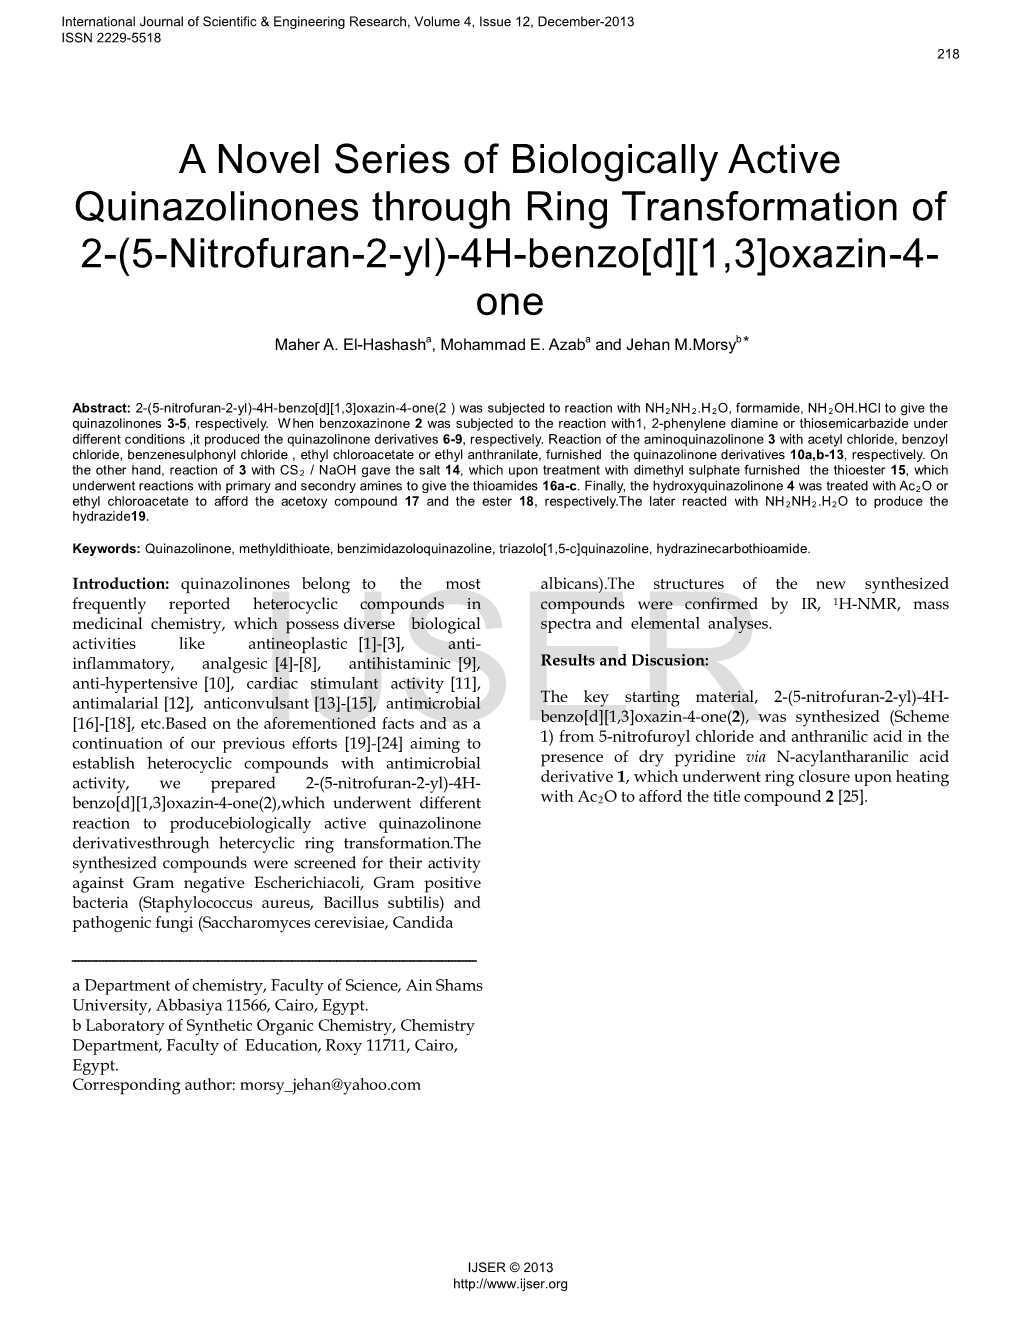 A Novel Series of Biologically Active Quinazolinones Through Ring Transformation of 2-(5-Nitrofuran-2-Yl)-4H-Benzo[D][1,3]Oxazin-4- One a a B Maher A